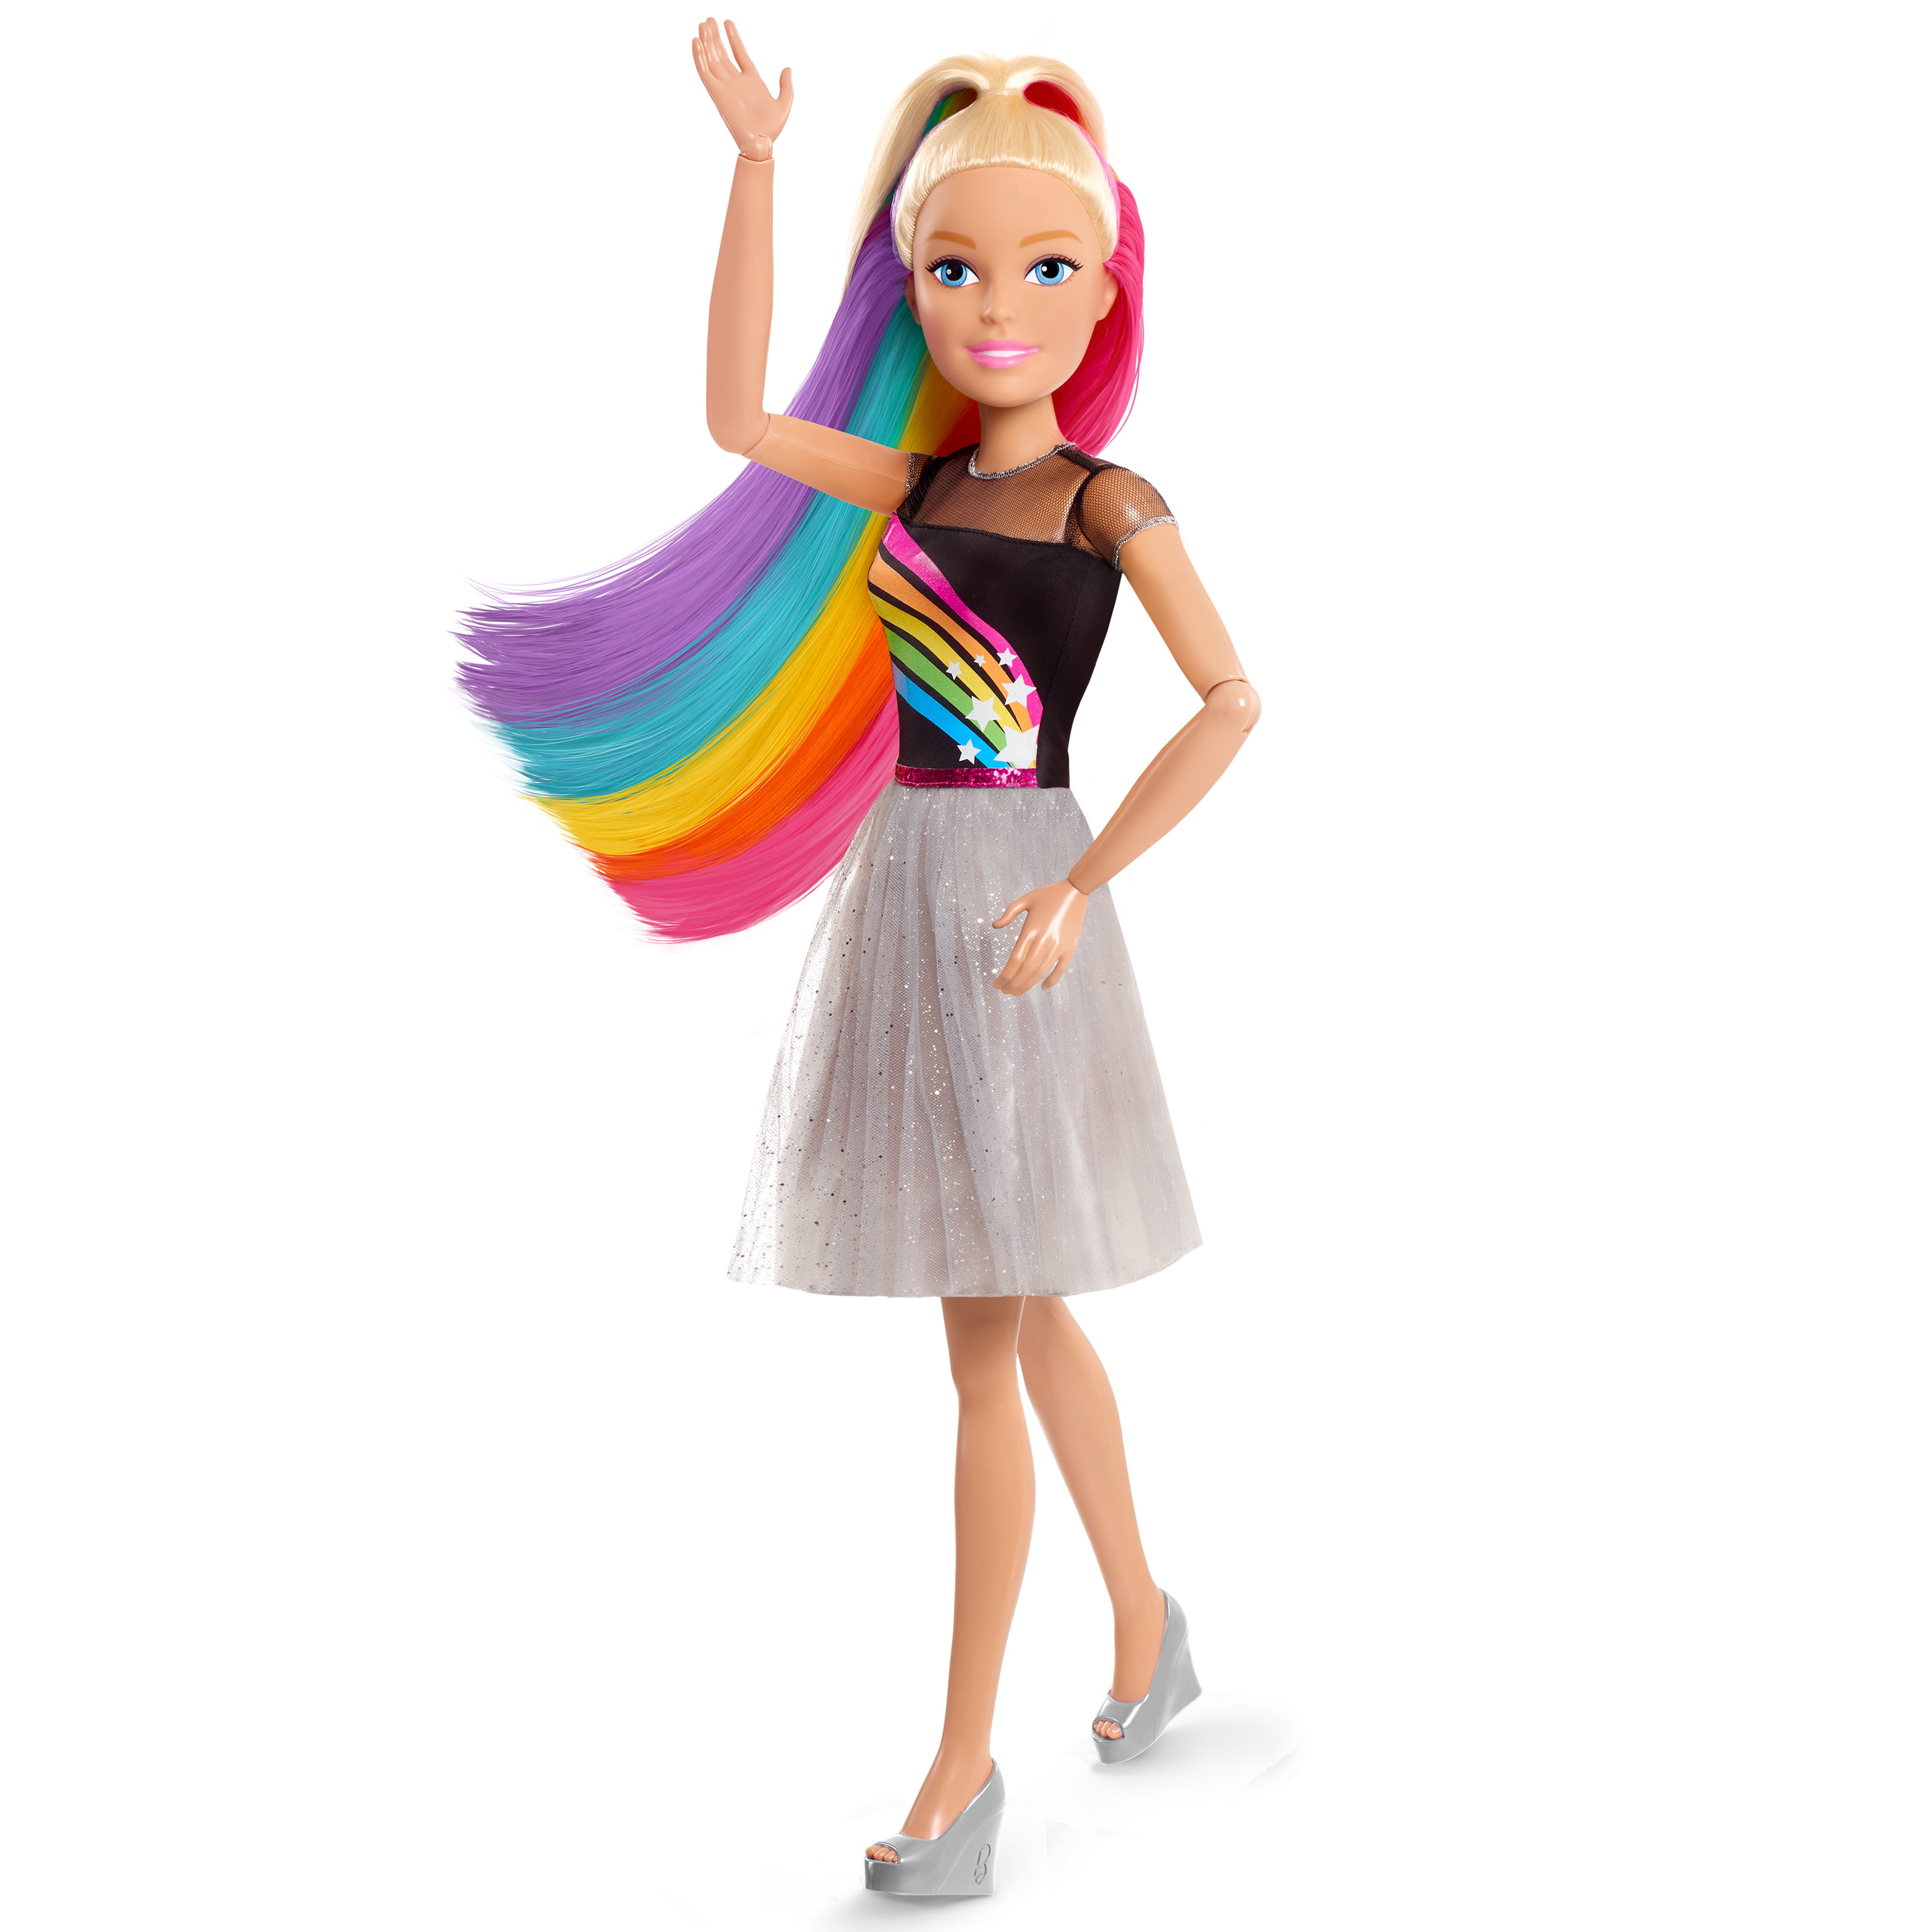 Blonde toys. Кукла Barbie лучшая подружка, 70 см, 83885. Кукла Barbie лучшая подружка ростовая 83885. Кукла Barbie Rainbow hair. Кукла Барби 70 см.